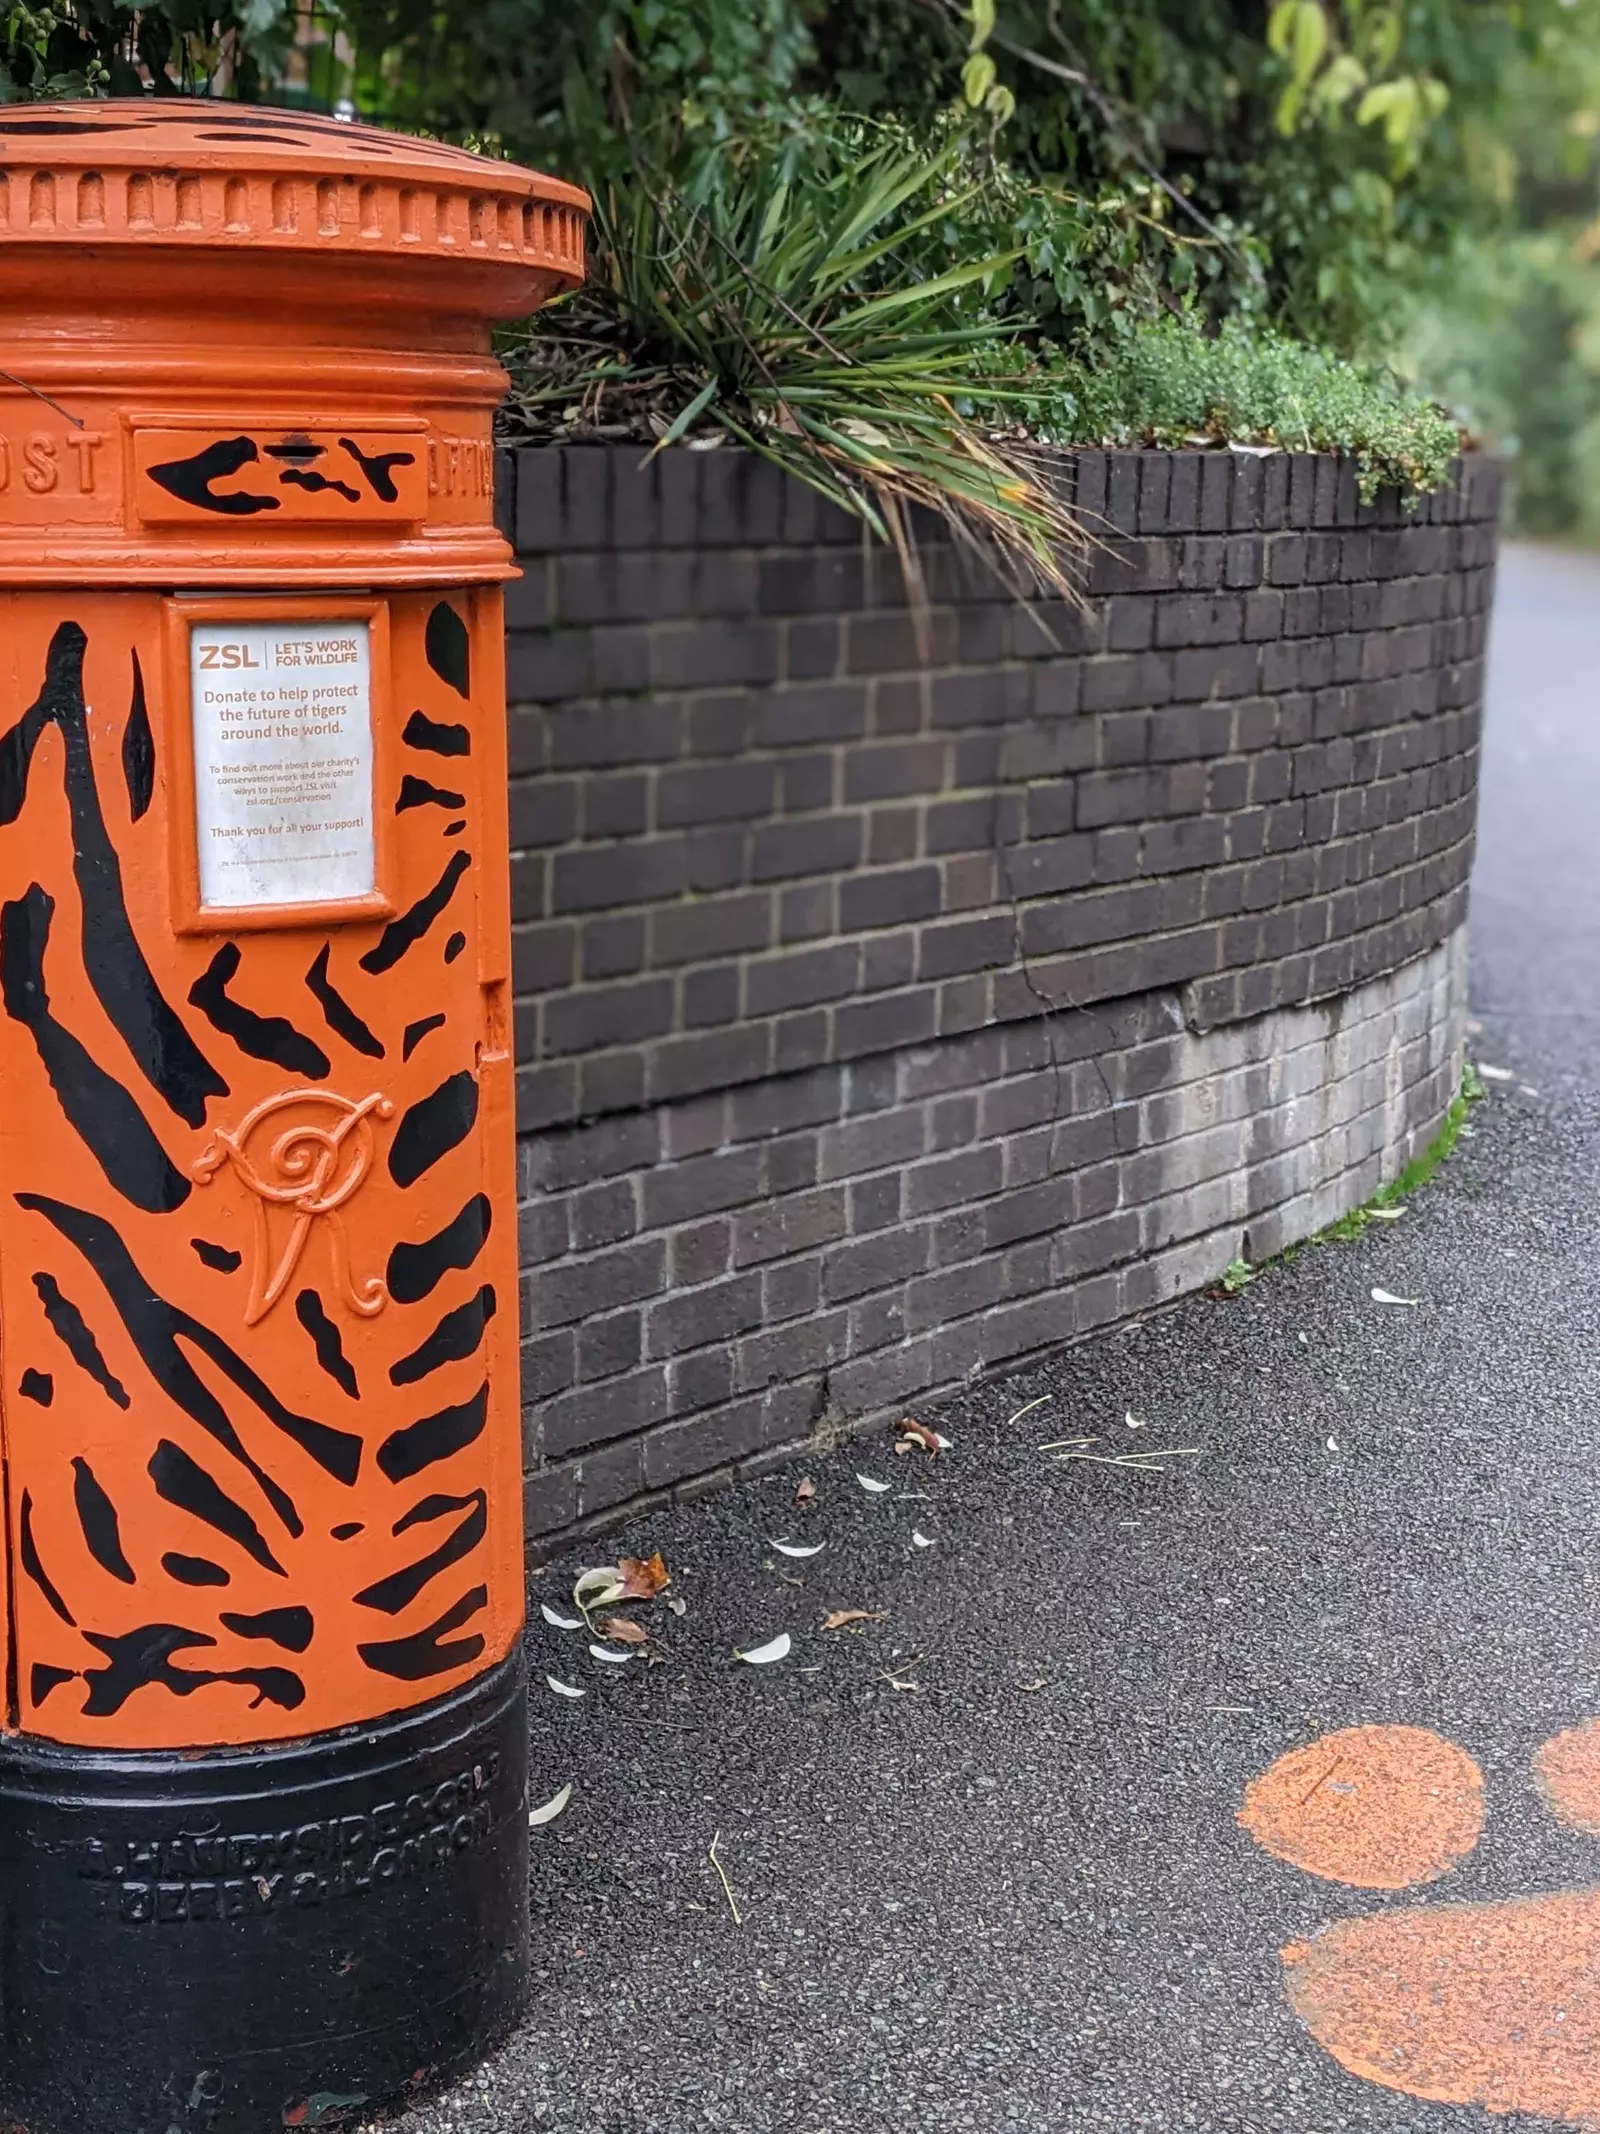 Queen Victoria tiger striped London Zoo postbox